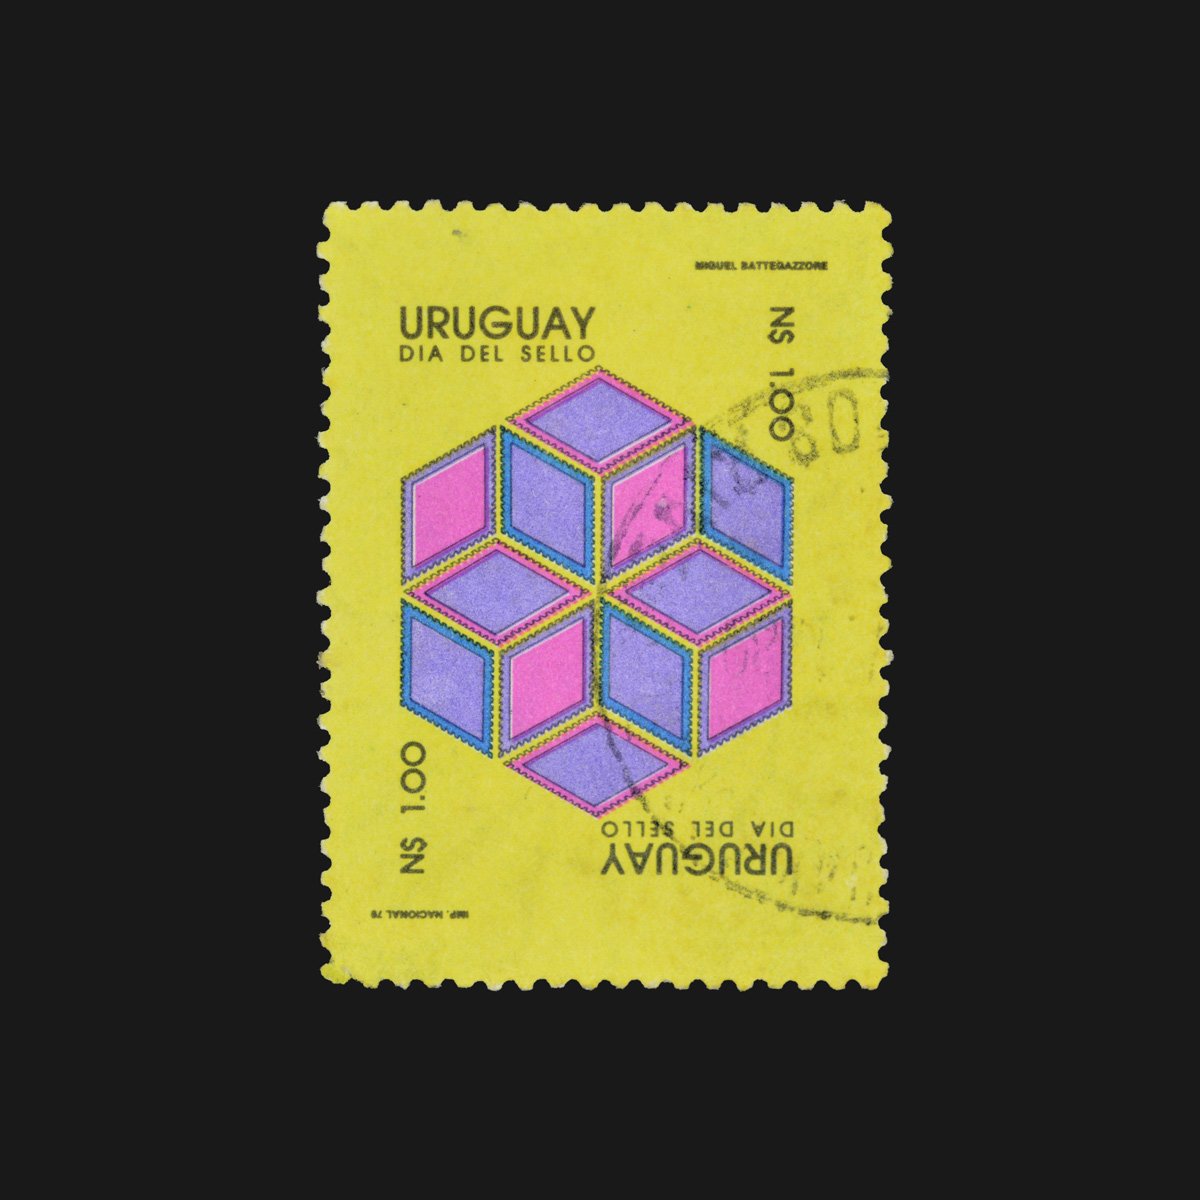 Slanted-1200px-Día-del-Sello-Uruguayo-✺-Uruguayan-Postal-Stamp-Day-✺-Miguel-Battegazzore-✺-N$1-✺-Circa-1978